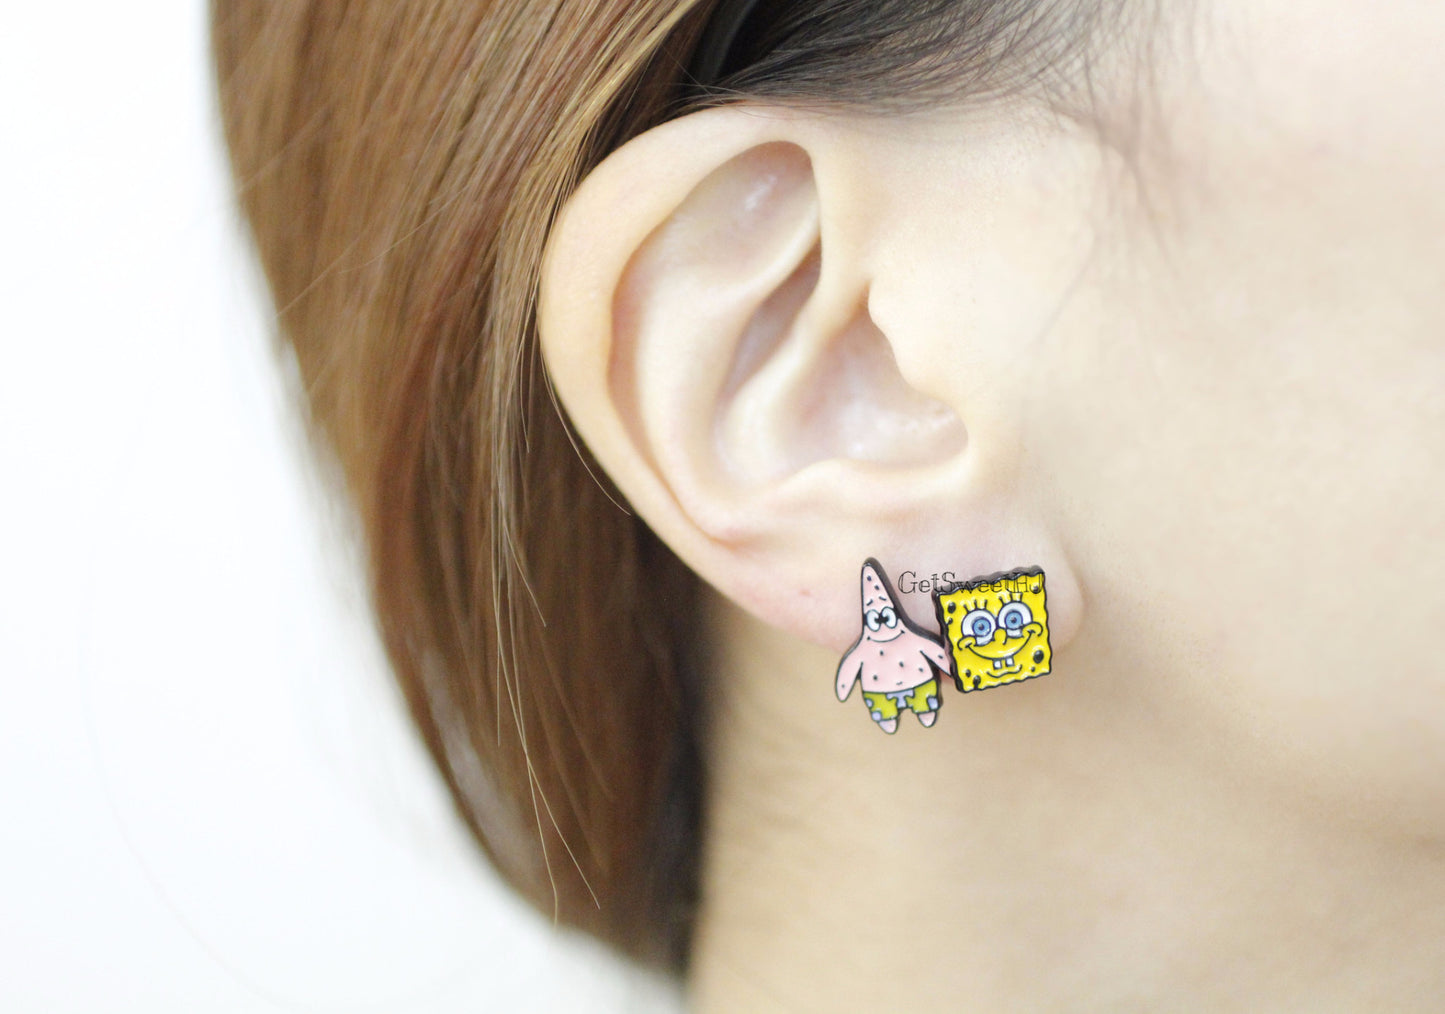 Spongebob Squarepants and Patrick Star Cartoon Earrings /Anpanman and Baikinman Earrings